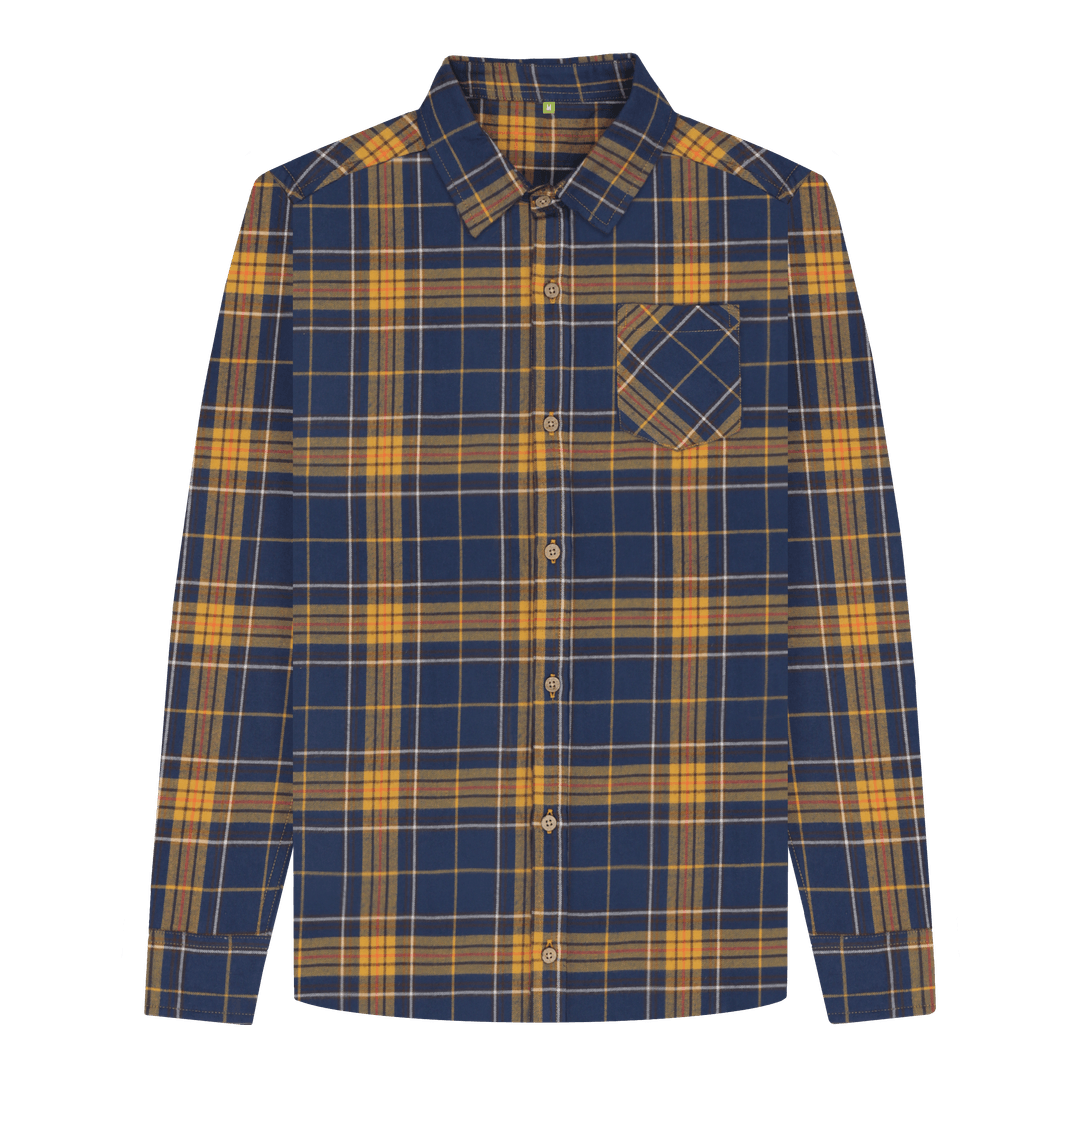 Men's Flannel Shirt